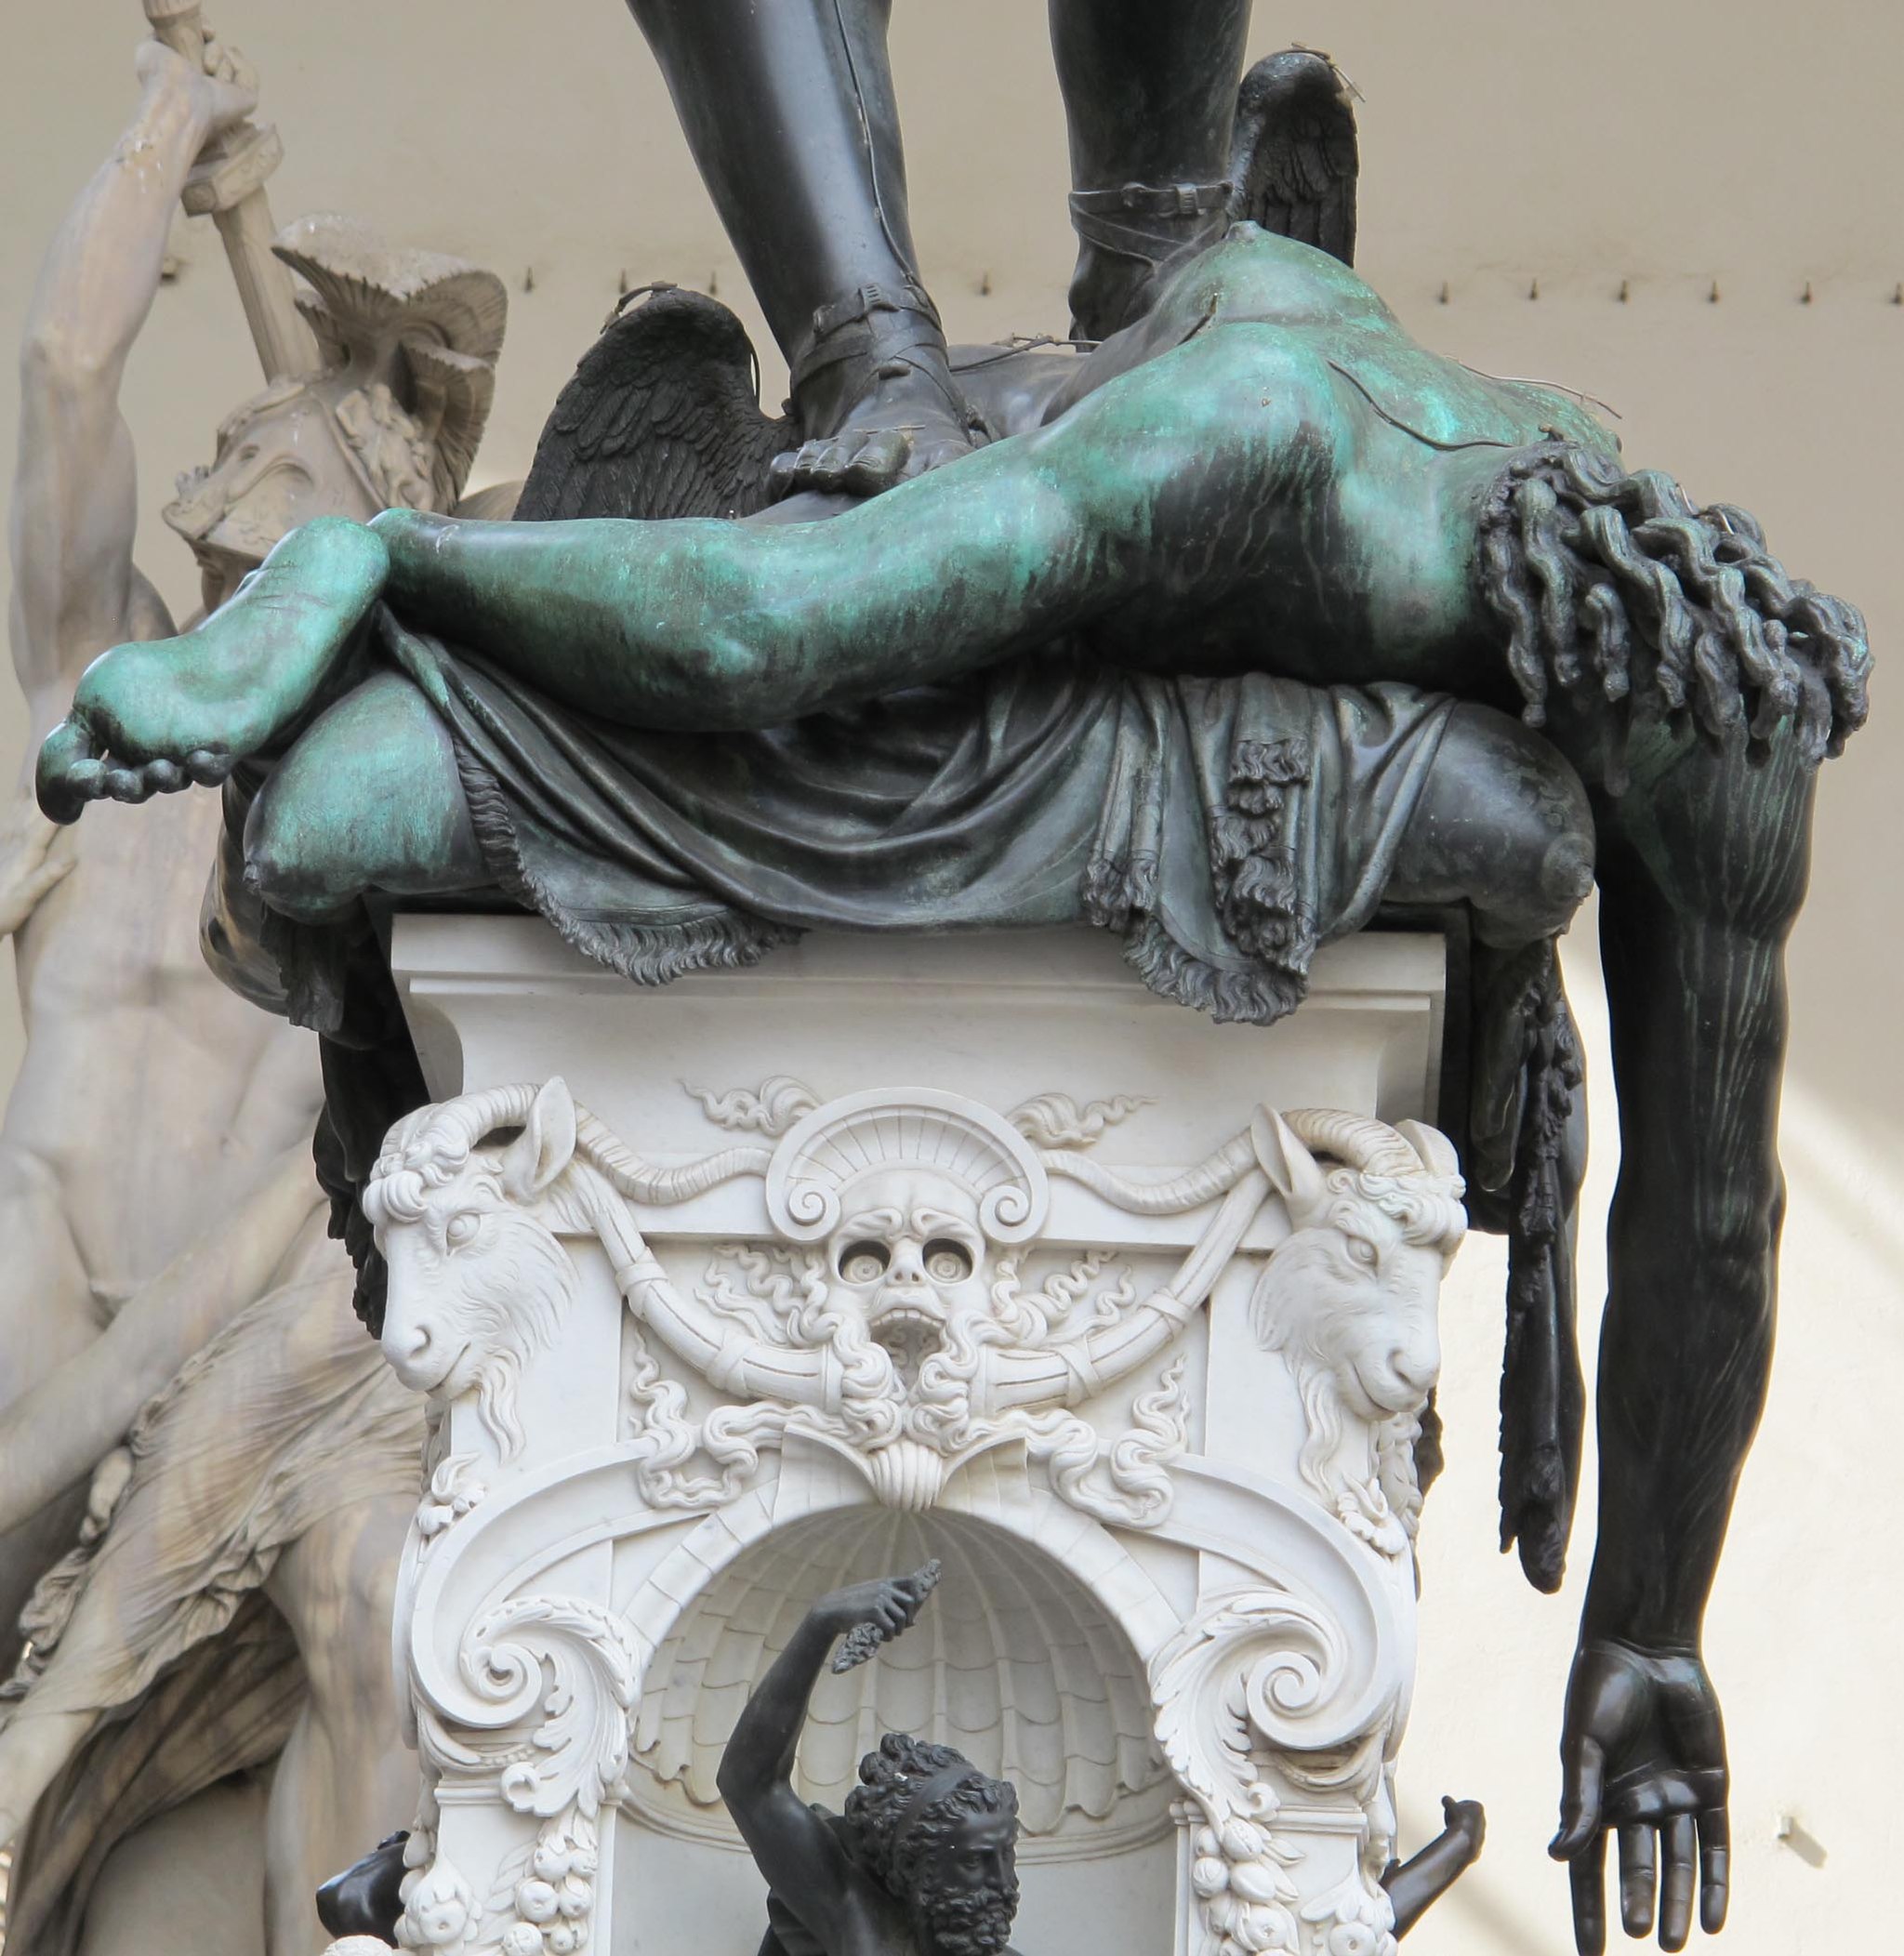 Benvenuto Cellini, Perseo con la testa di Medusa (detail van het lichaam van Medusa rustend op de sokkel), c. 1554, Loggia dei Lanzi, Piazza della Signoria, Firenze